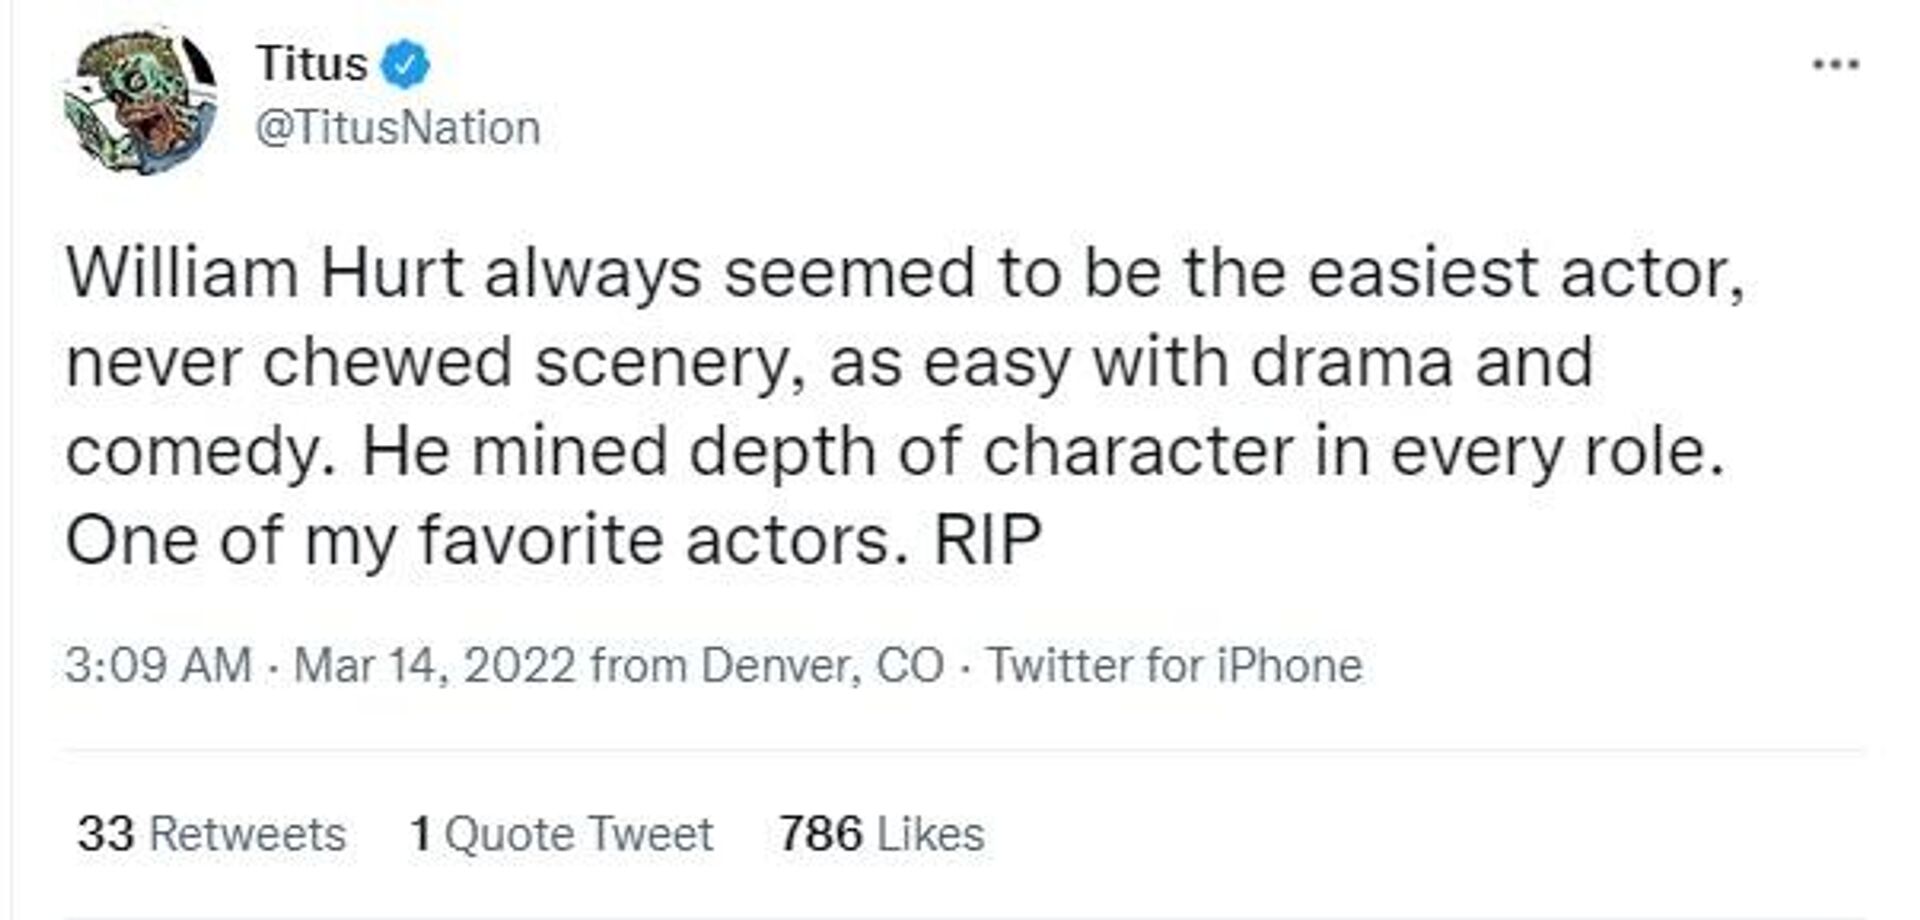 American comedian Titus pour in condolences on veteran Oscar-winning actor William Hurt's demise - Sputnik International, 1920, 14.03.2022